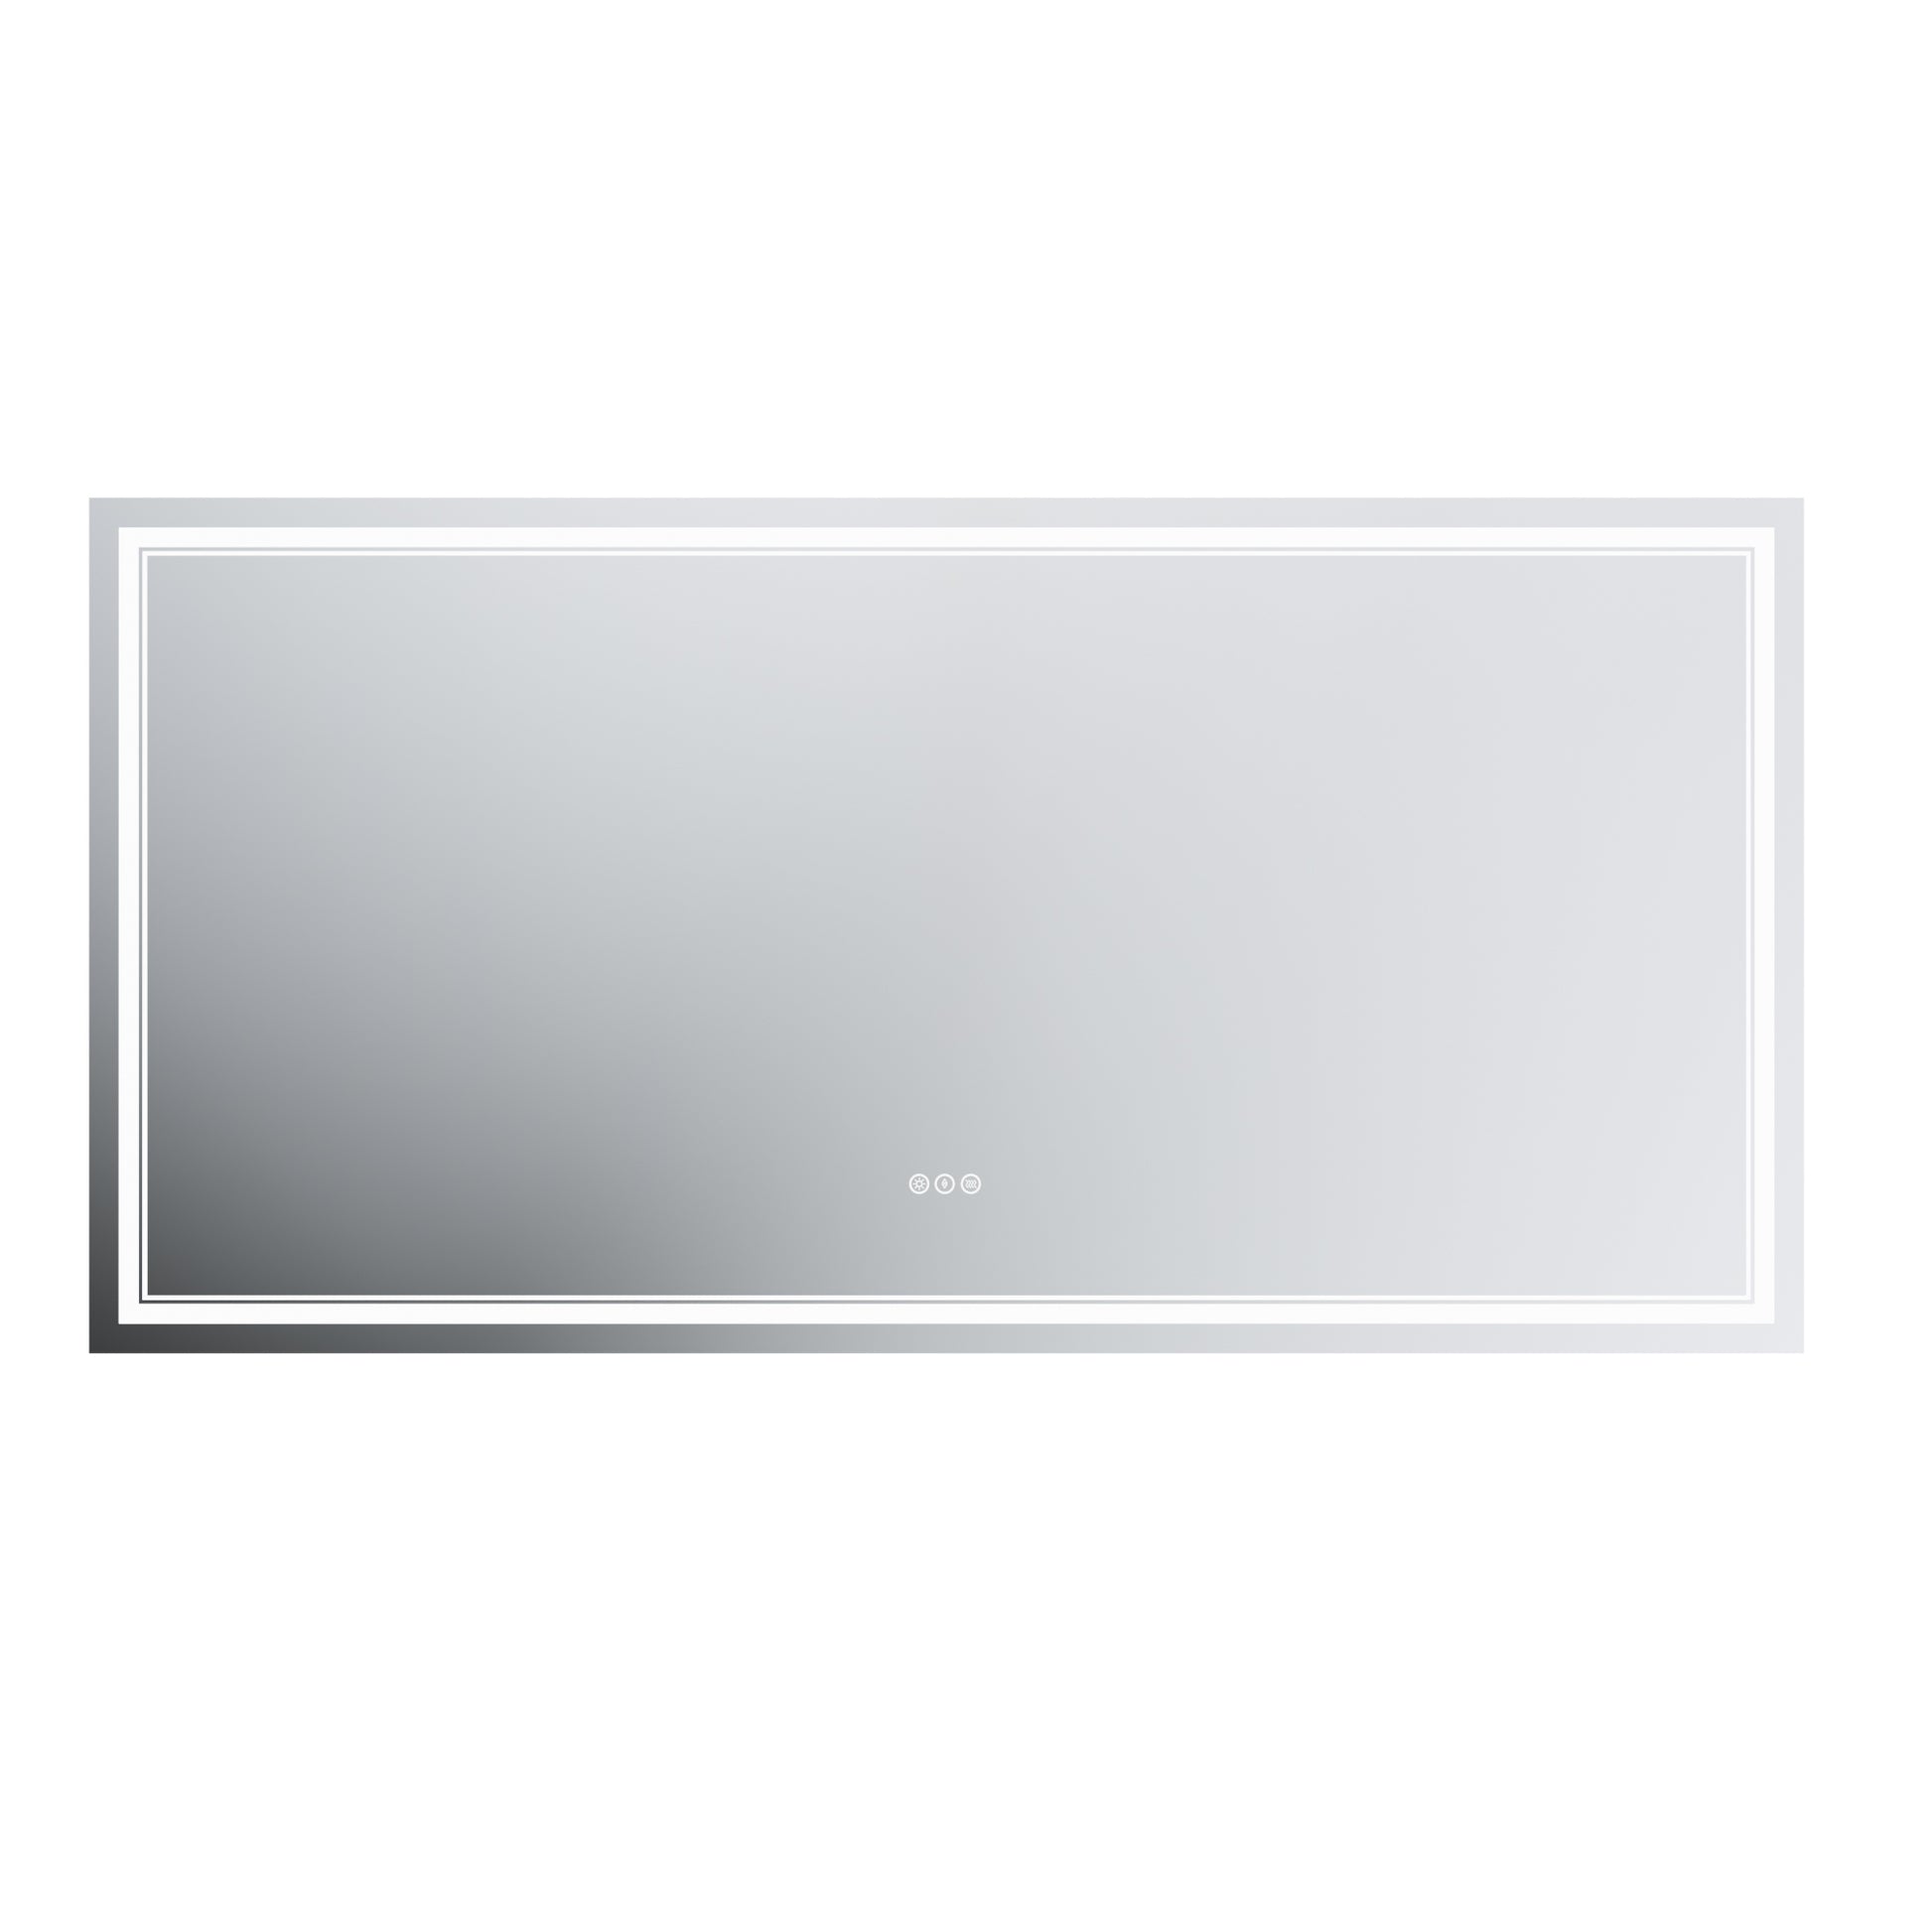 LED Bathroom Mirror, 36x72 inch Bathroom Vanity white-aluminium